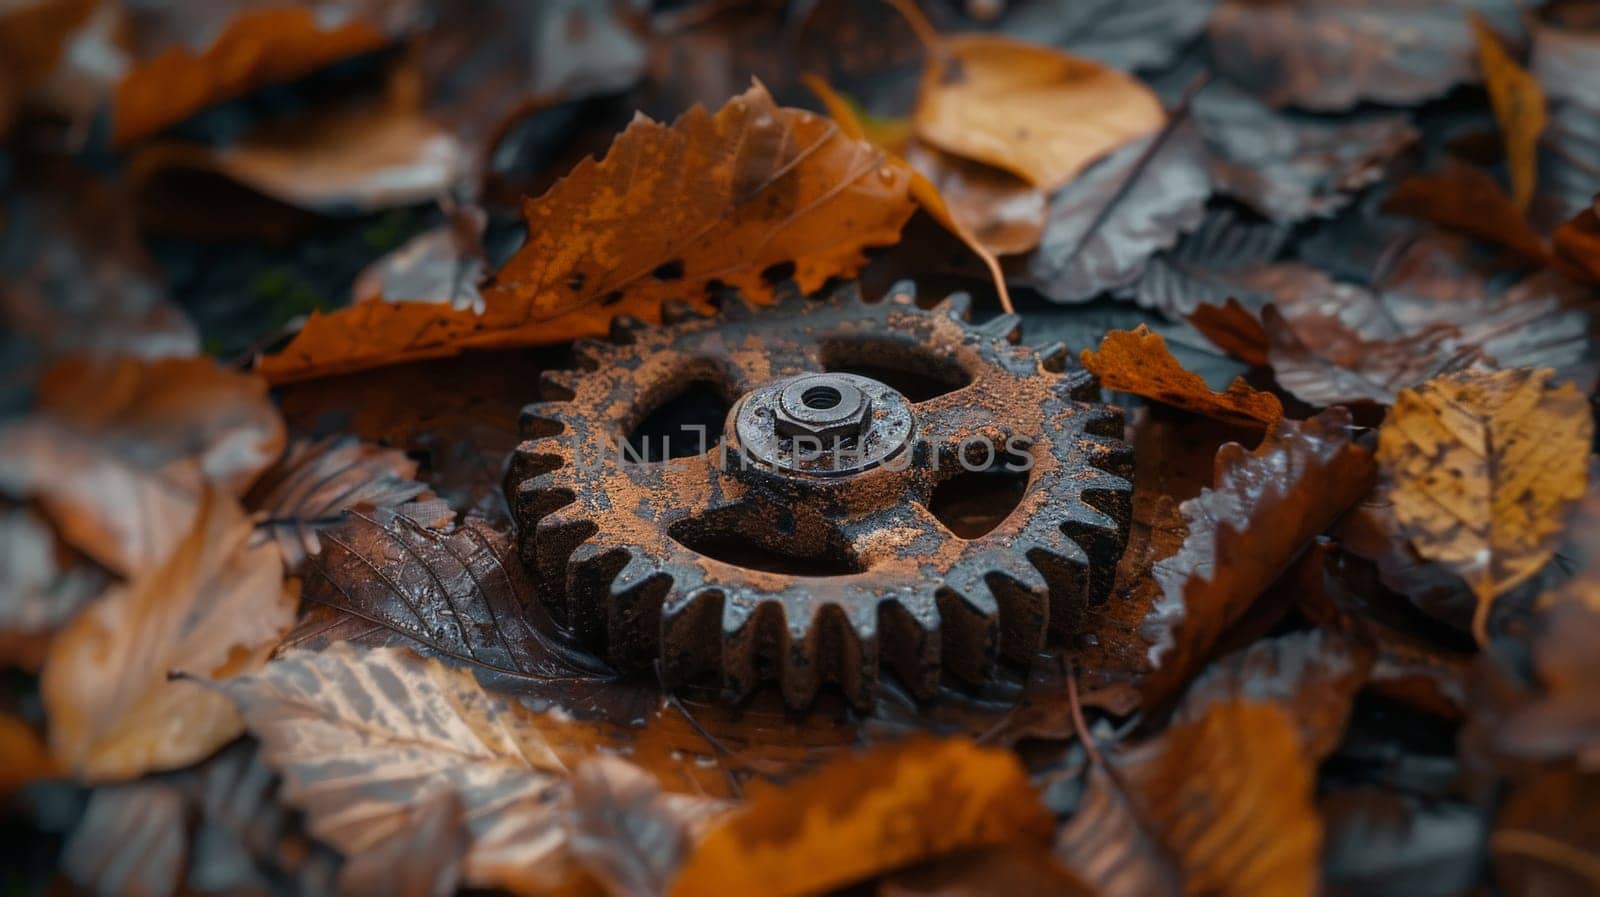 small rust gear wheel on the ground, Rusty Gears by nijieimu